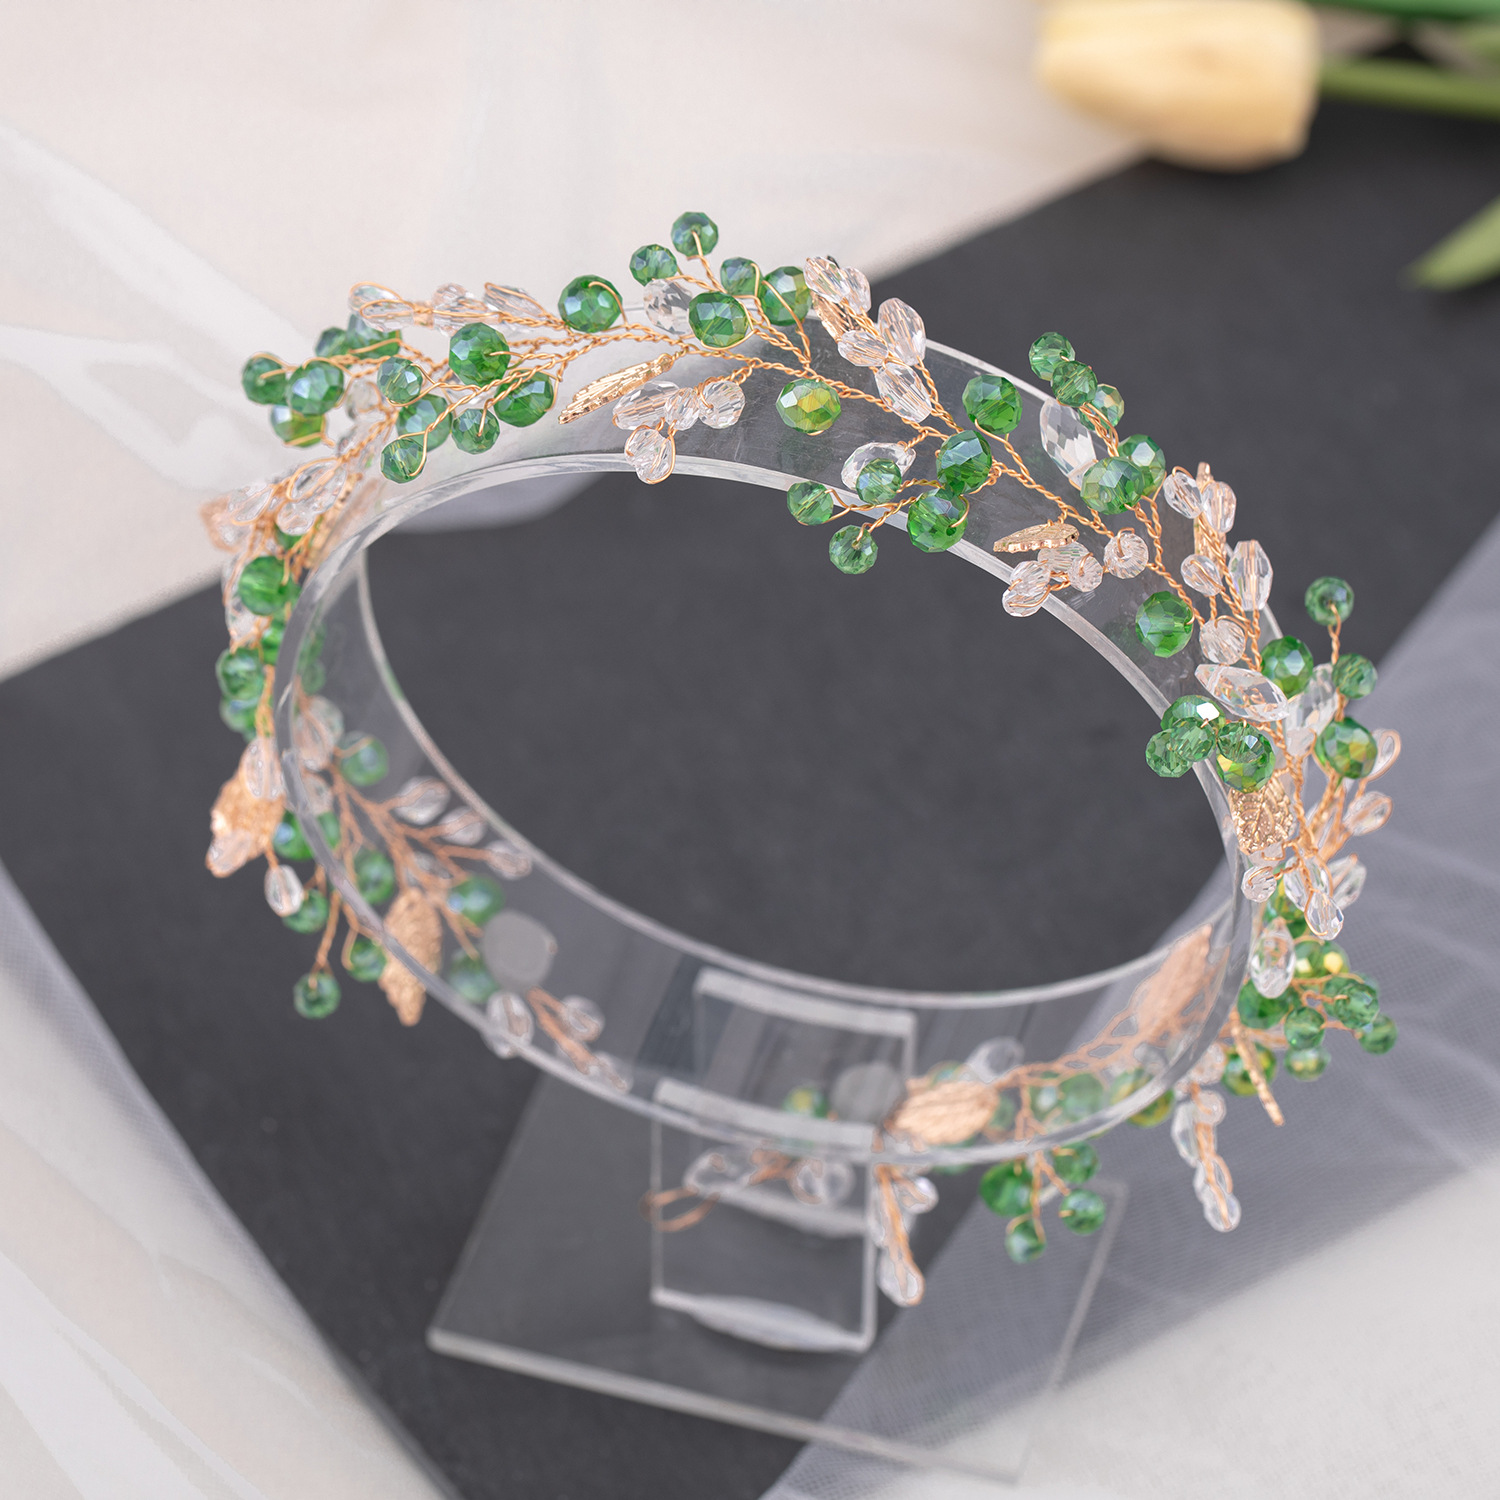 Cristal grânulo flor bandana acessórios de cabelo tiaras nupcial headwear casamento jóias de cabelo festa baile de formatura headpiece